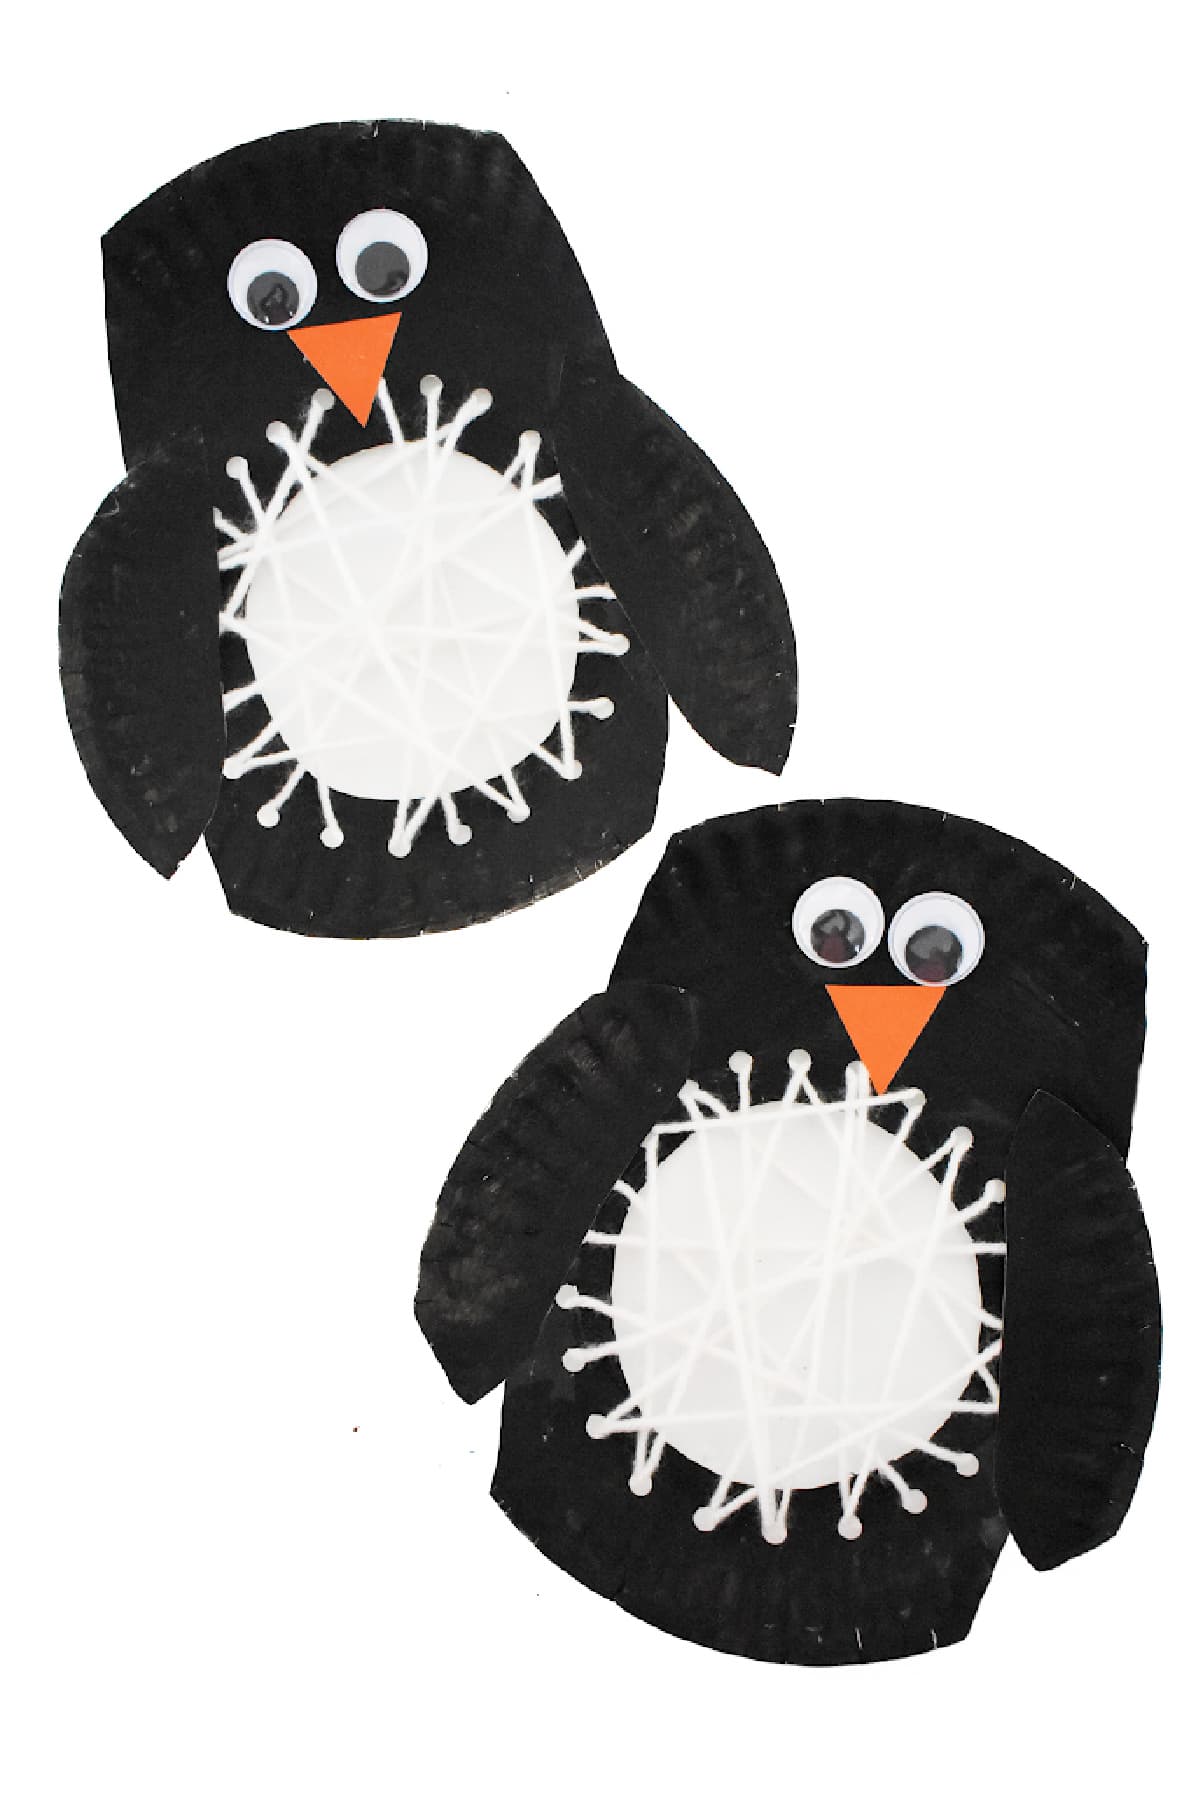 Penguin Craft For Kids